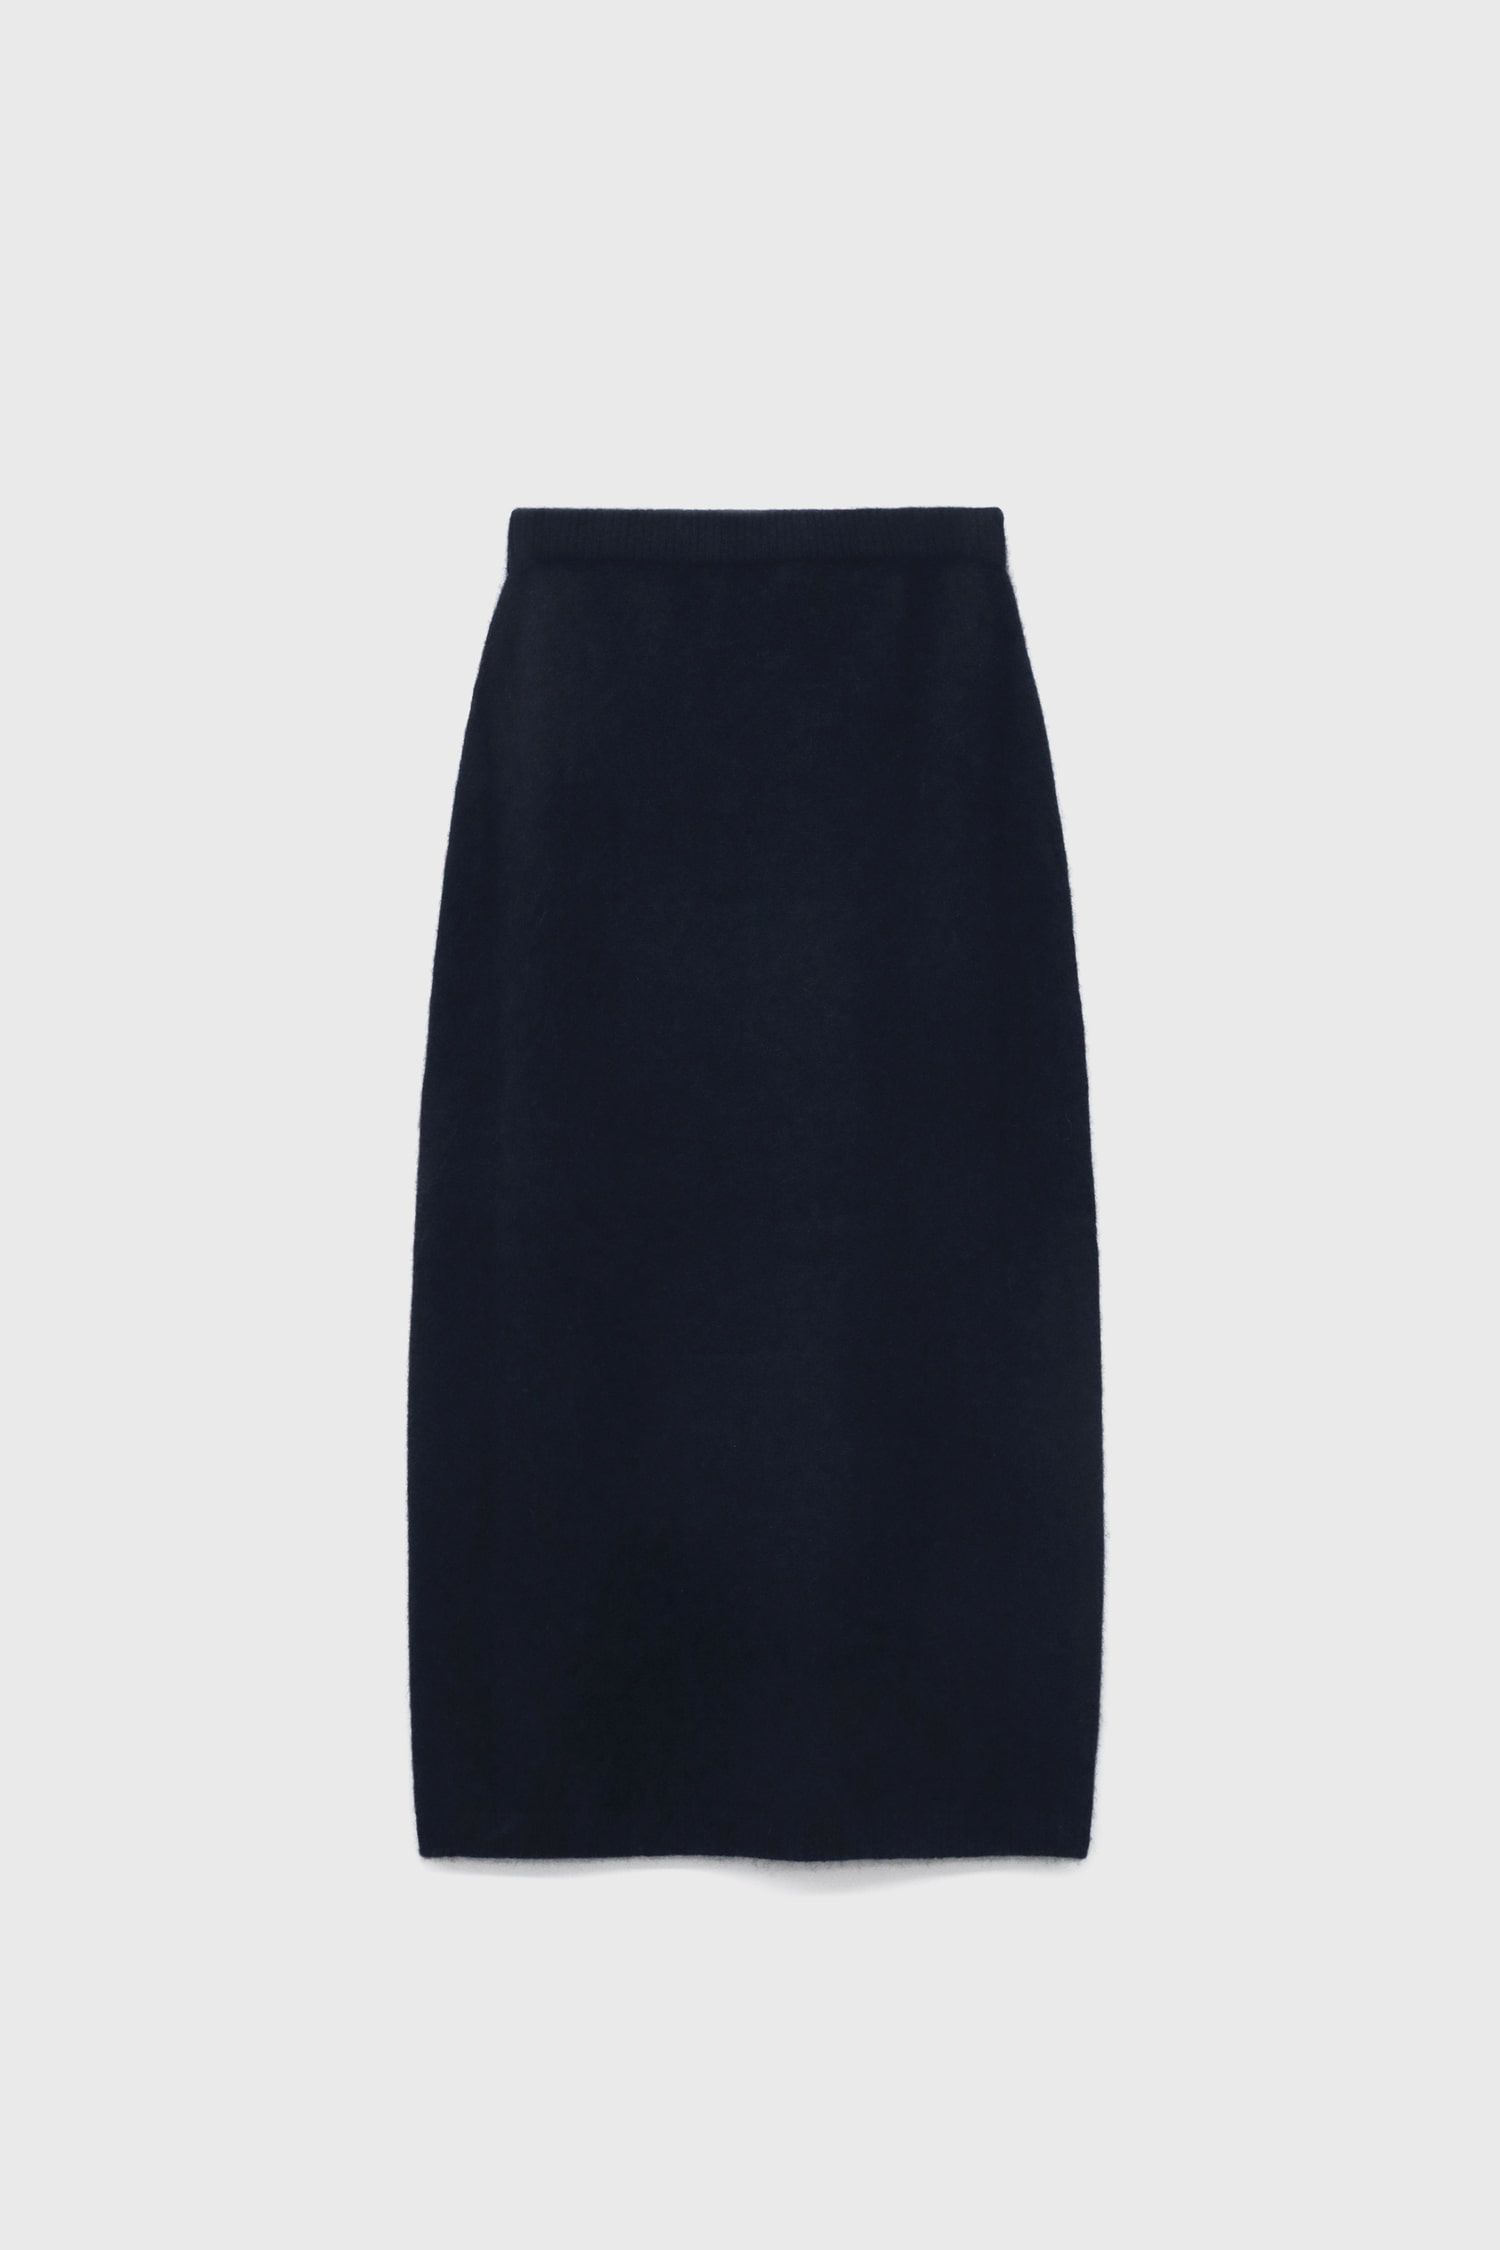 Cashmere Knit Skirt